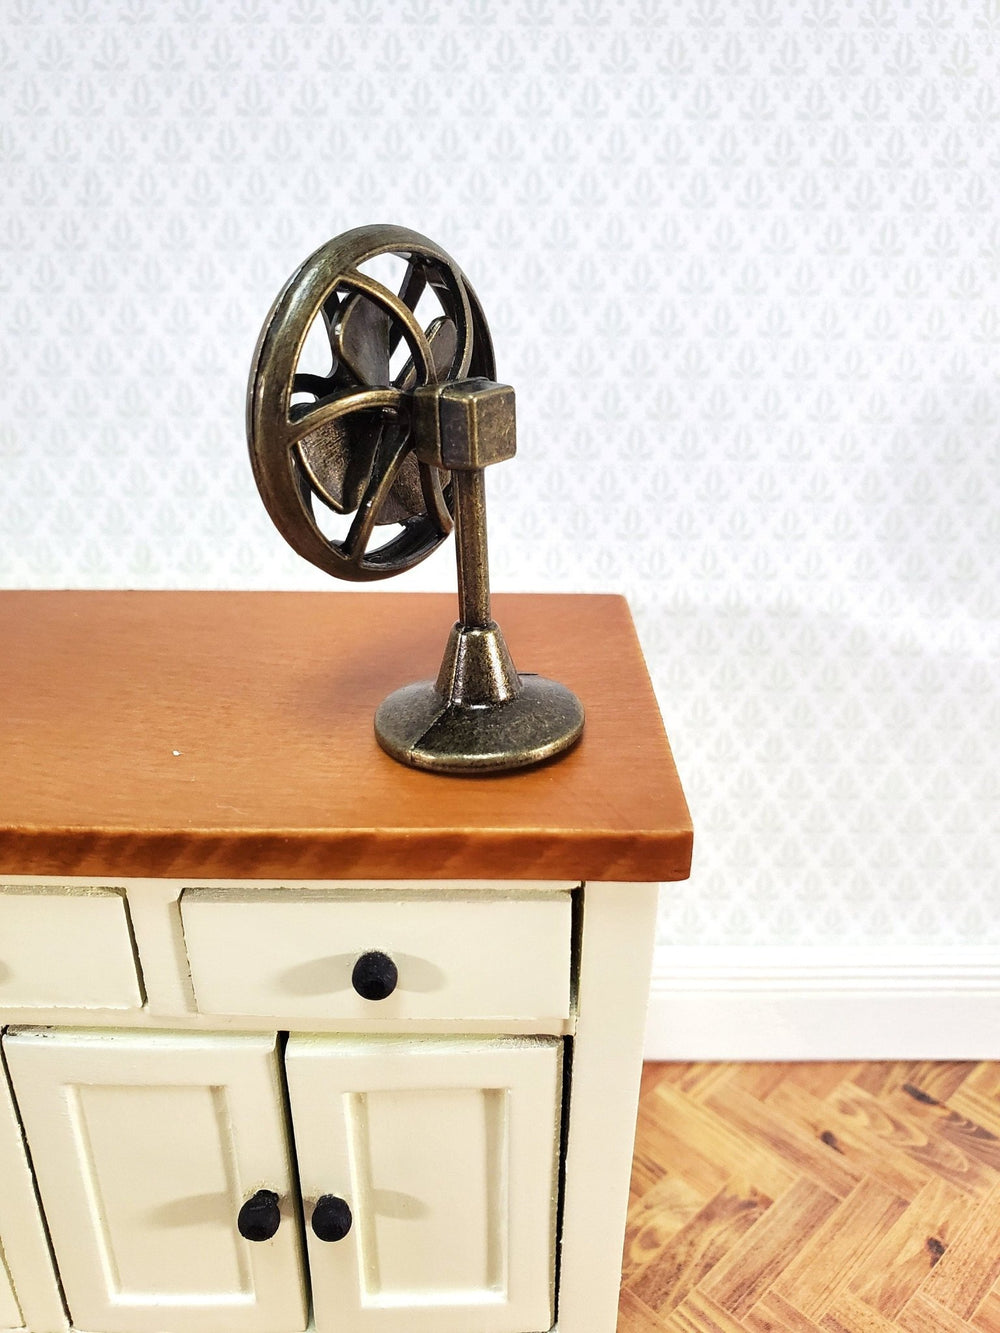 Dollhouse Tabletop Electric Fan Vintage Style 1:12 Scale Miniature Bronze Finish - Miniature Crush